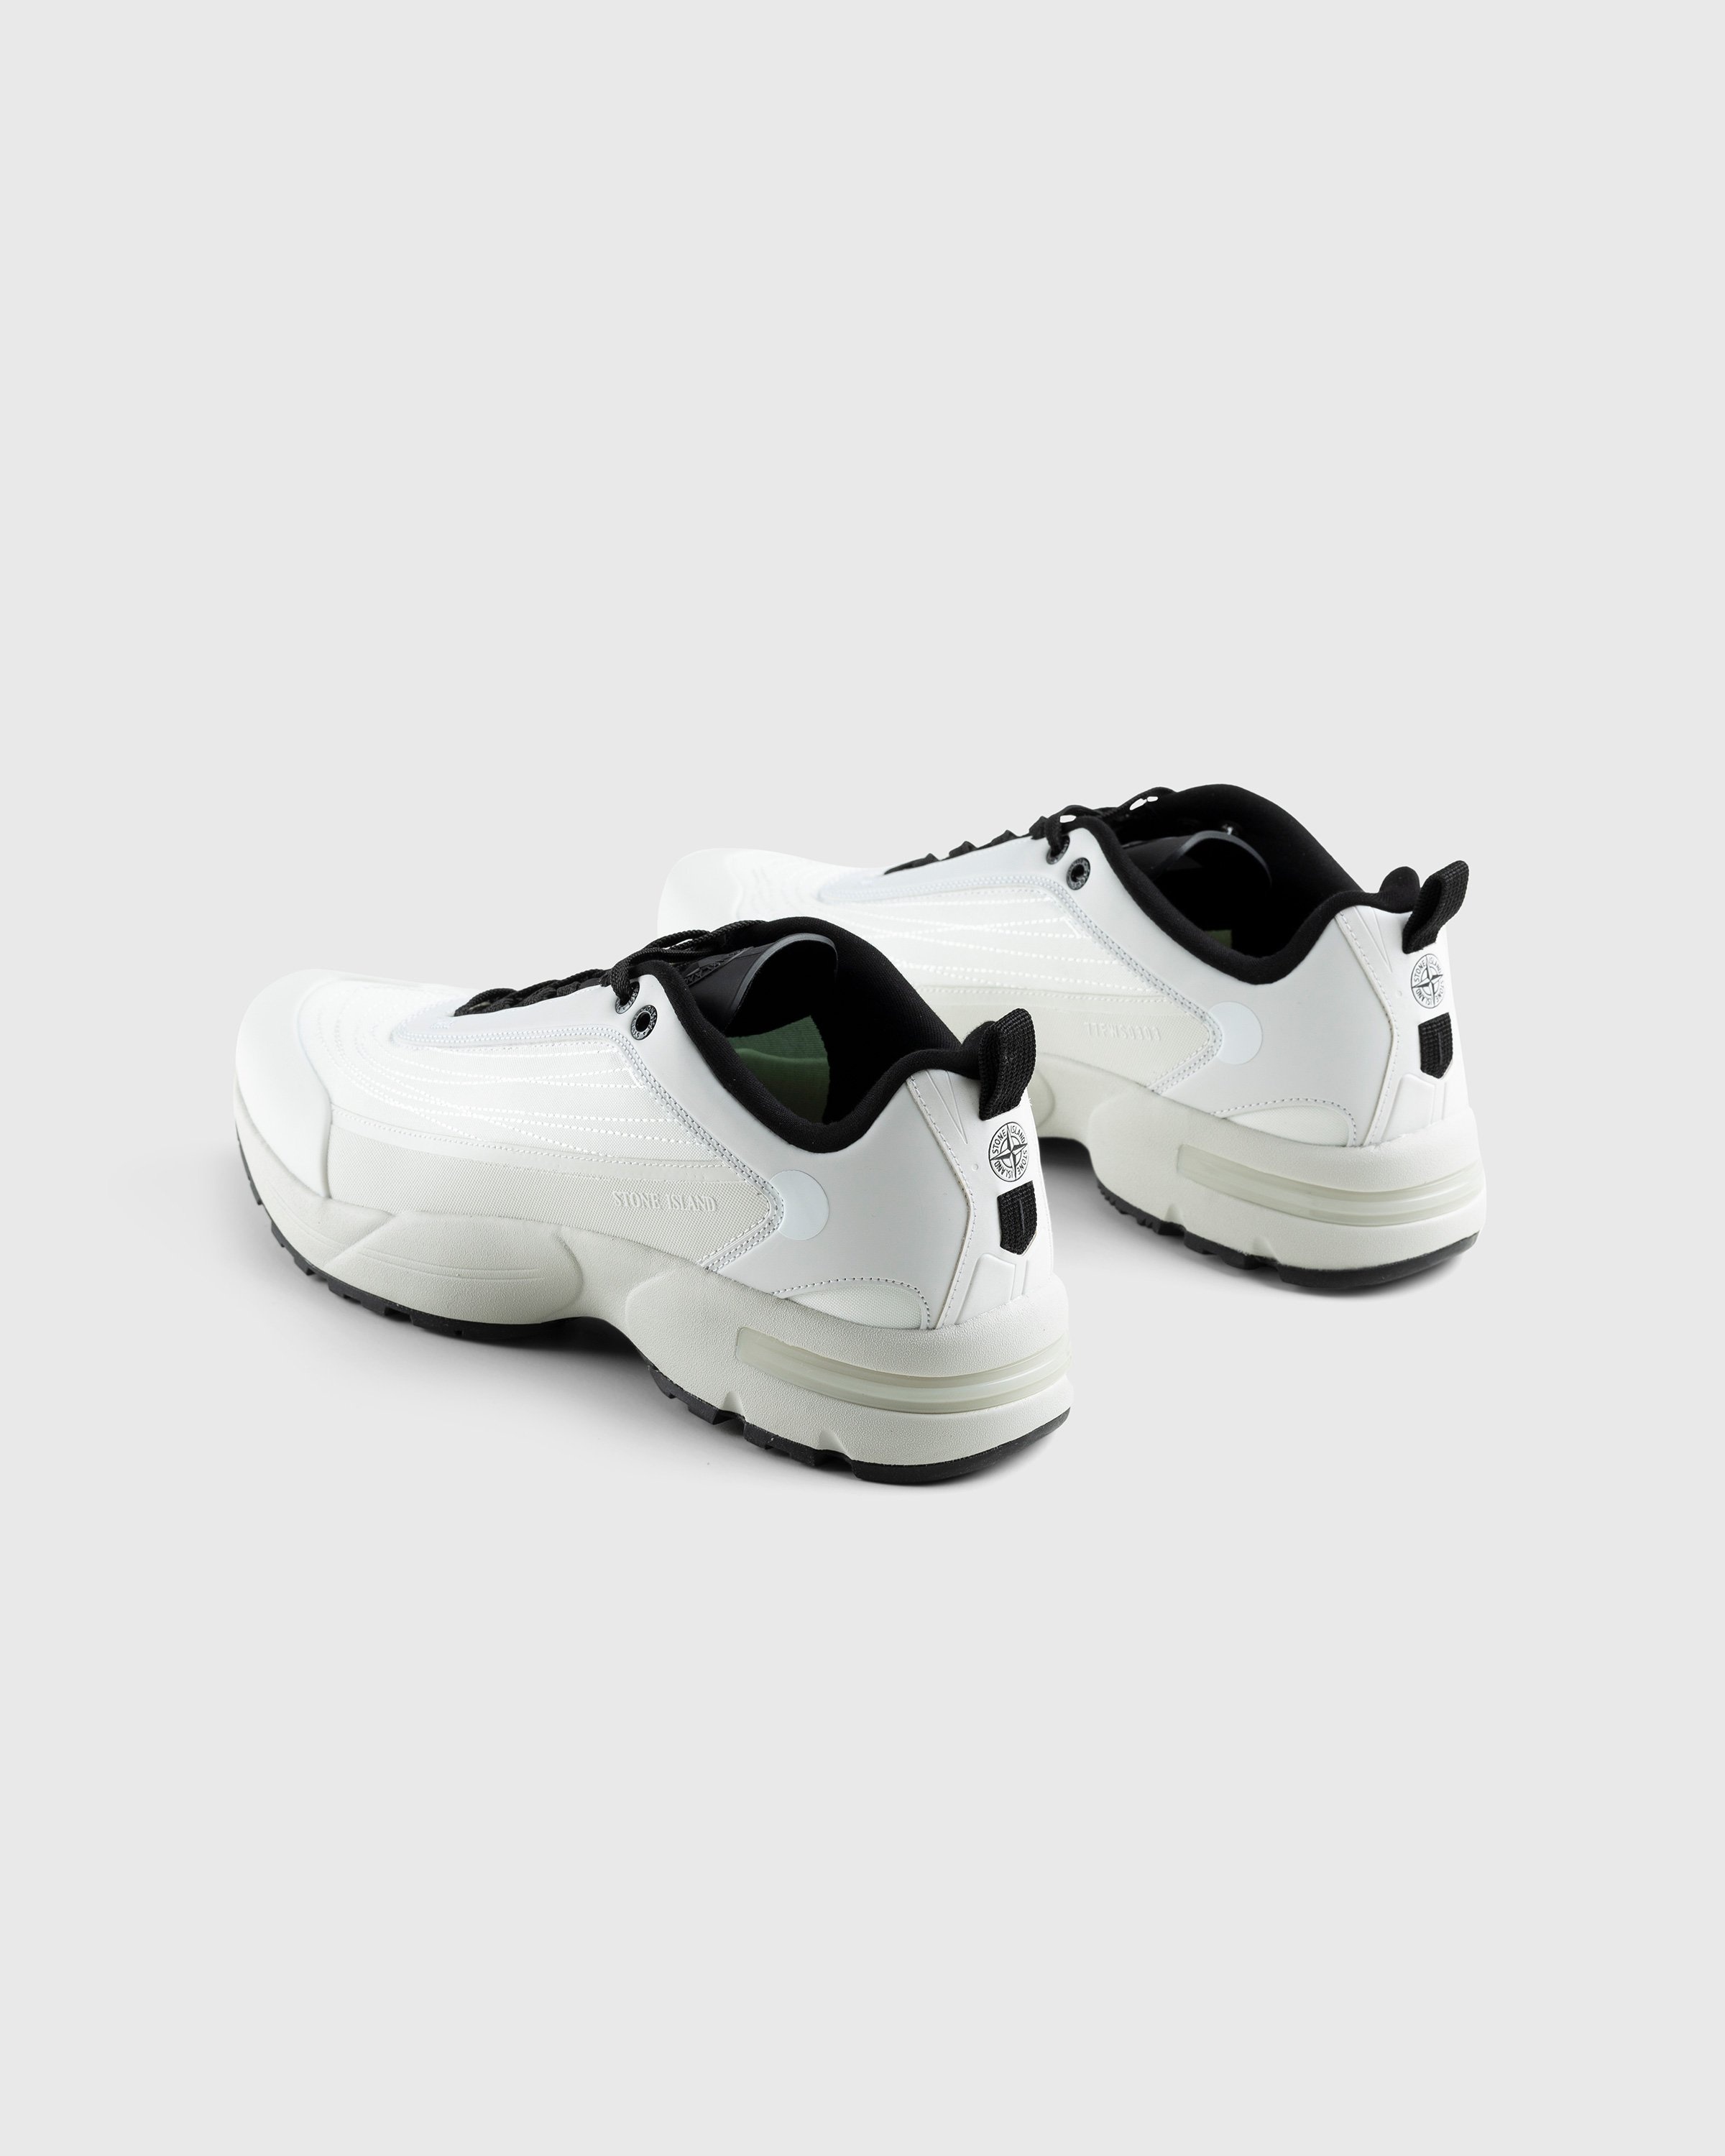 Stone Island – Grime Sneaker White - Sneakers - White - Image 4